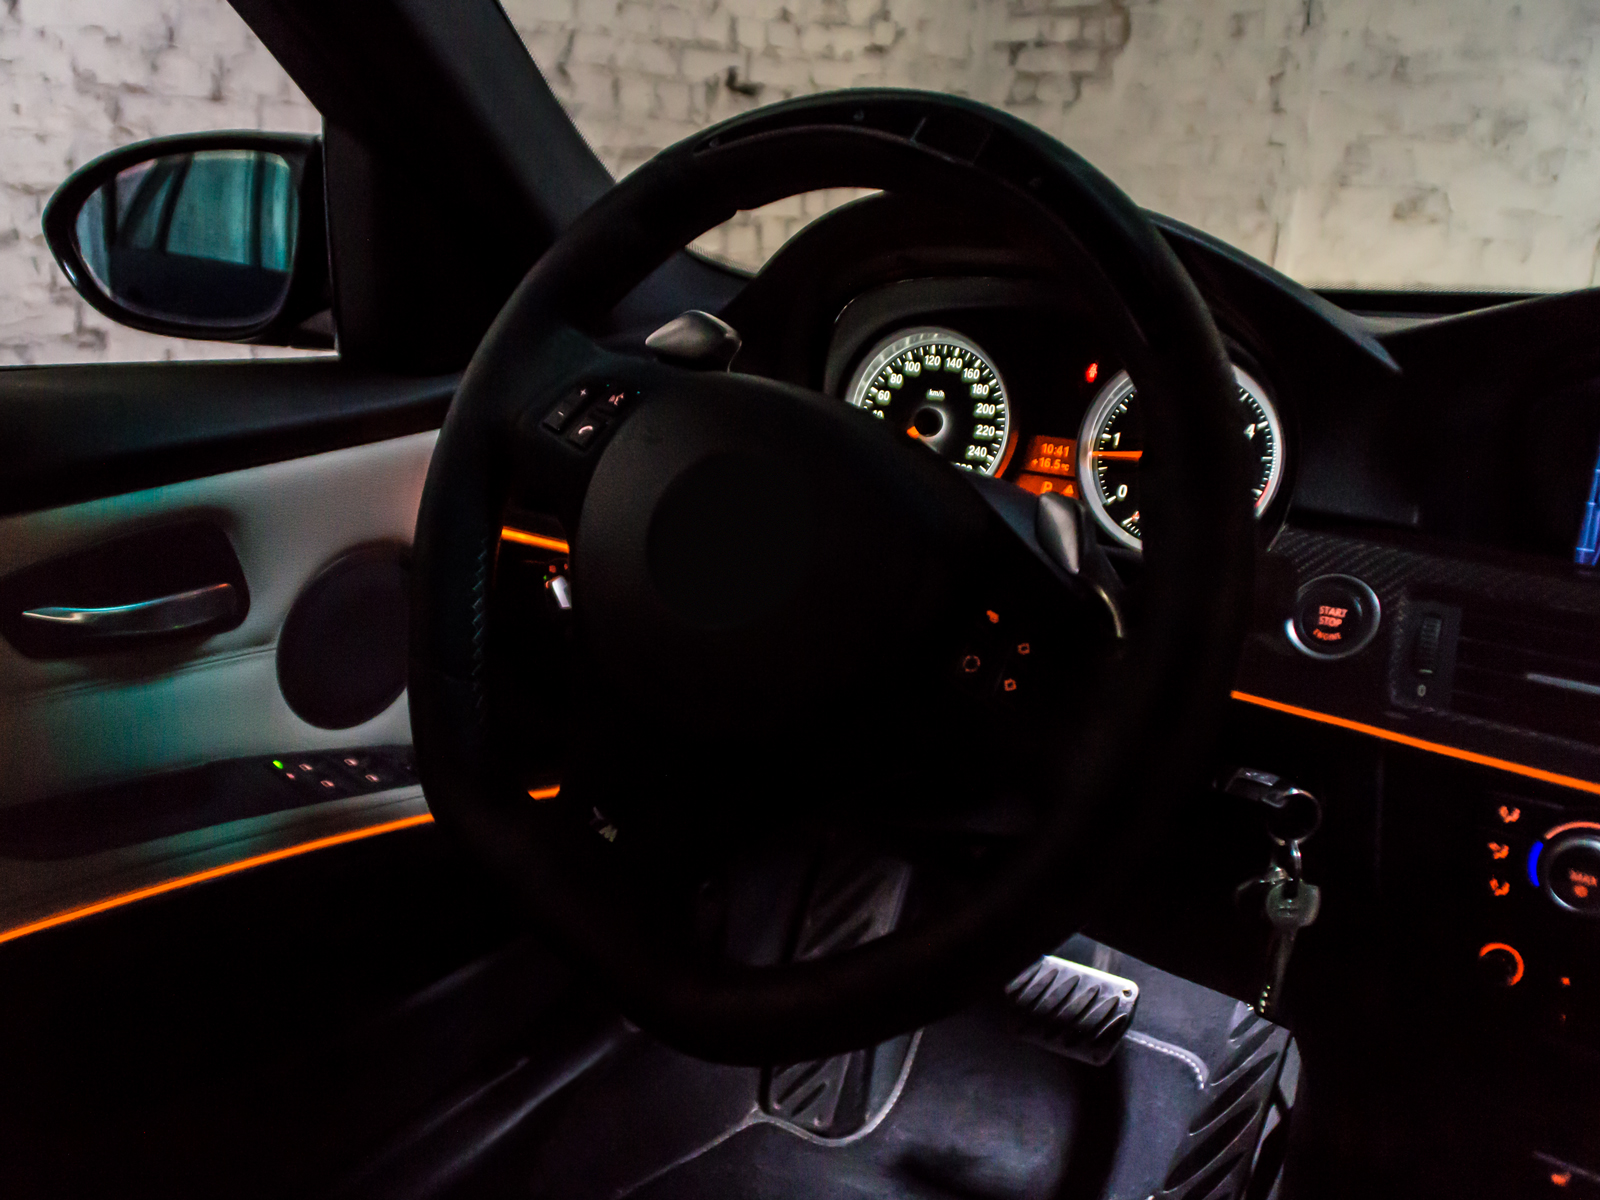 MaXtron® LED Innenraumbeleuchtung passend für BMW 3er E46 Coupe